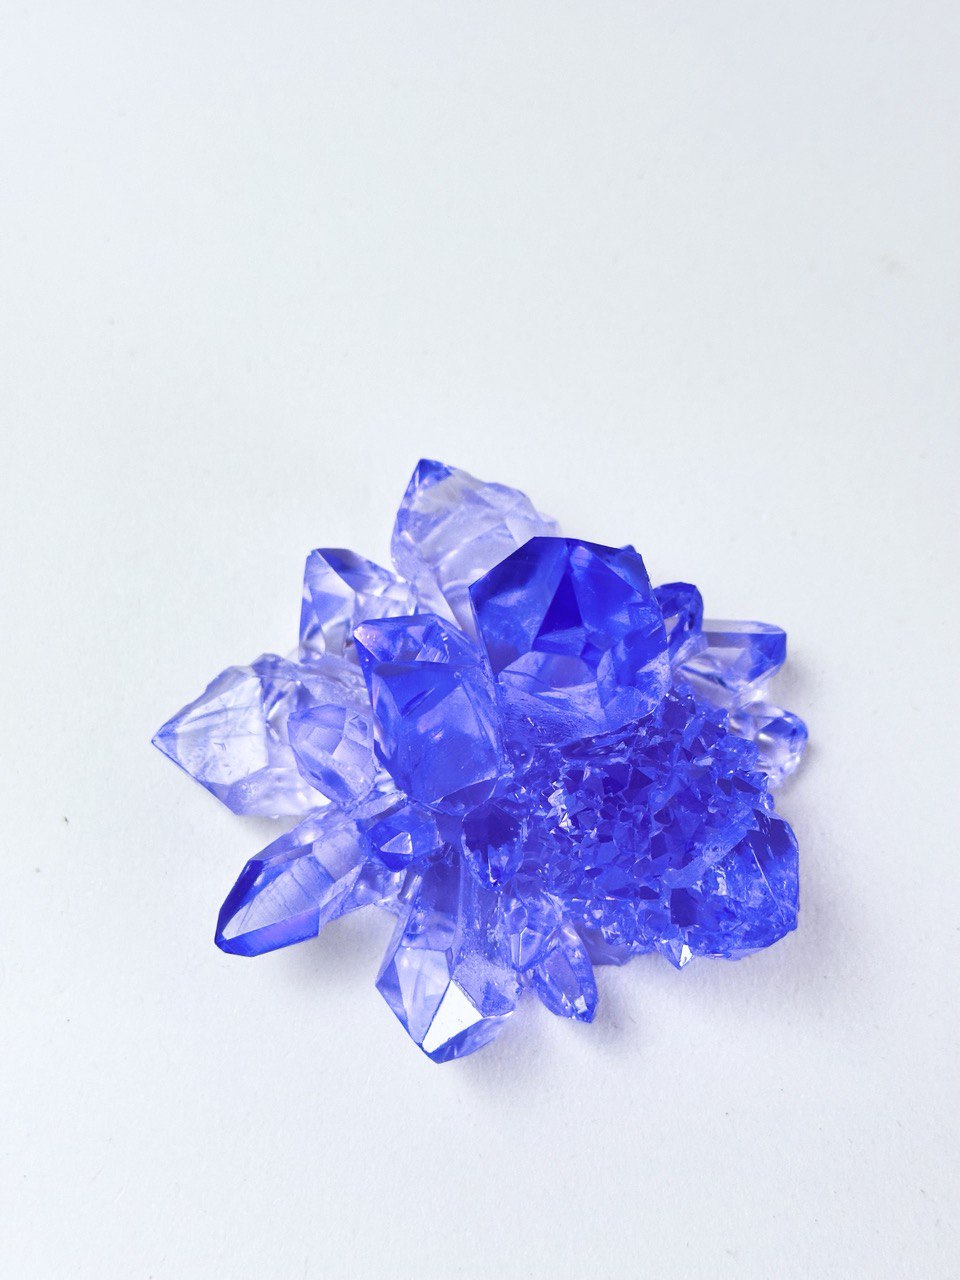 Stunning Amethyst Crystals Silicone Mold